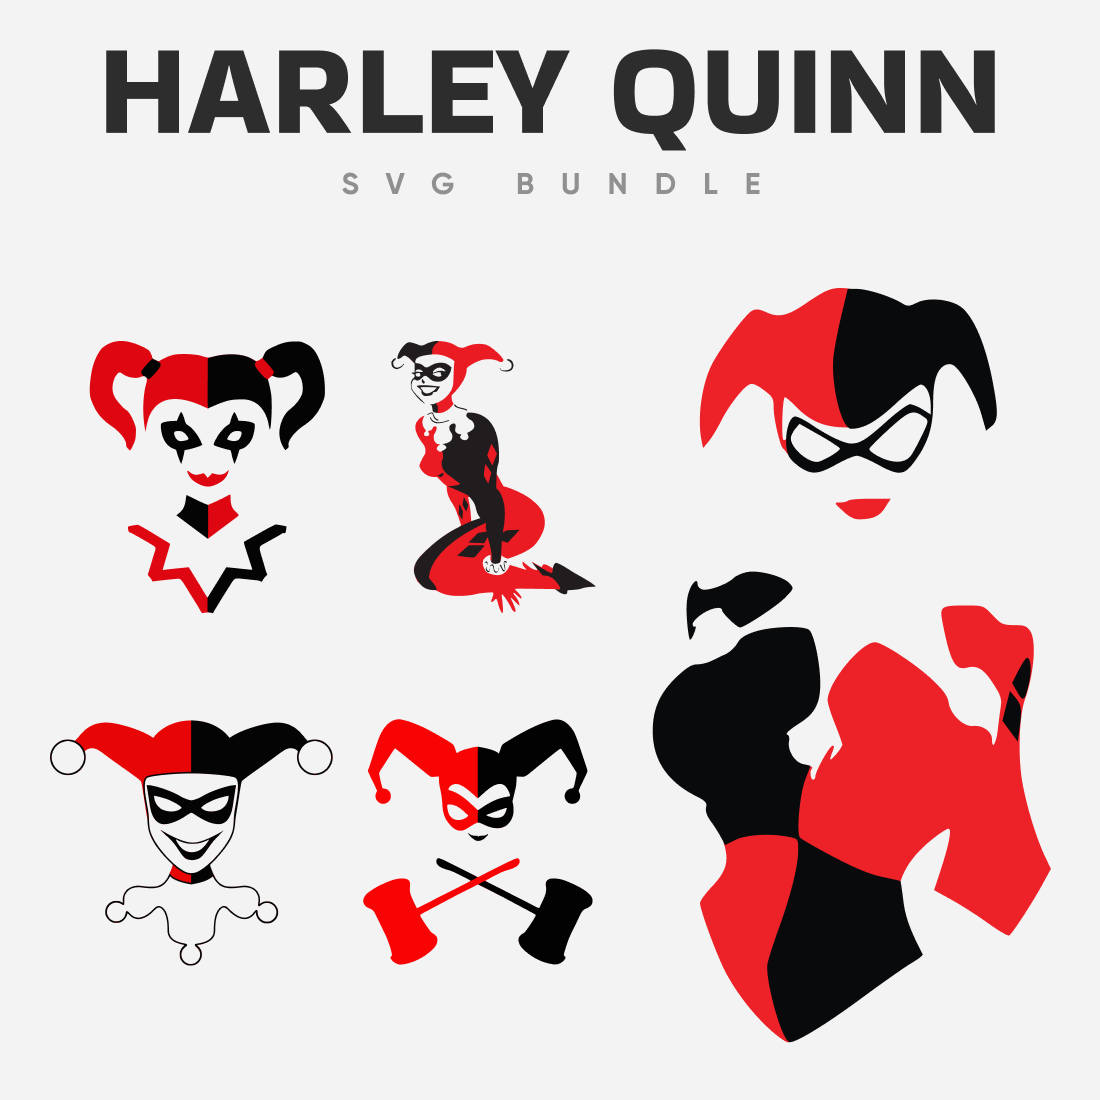 Harley quinn SVG bundle.